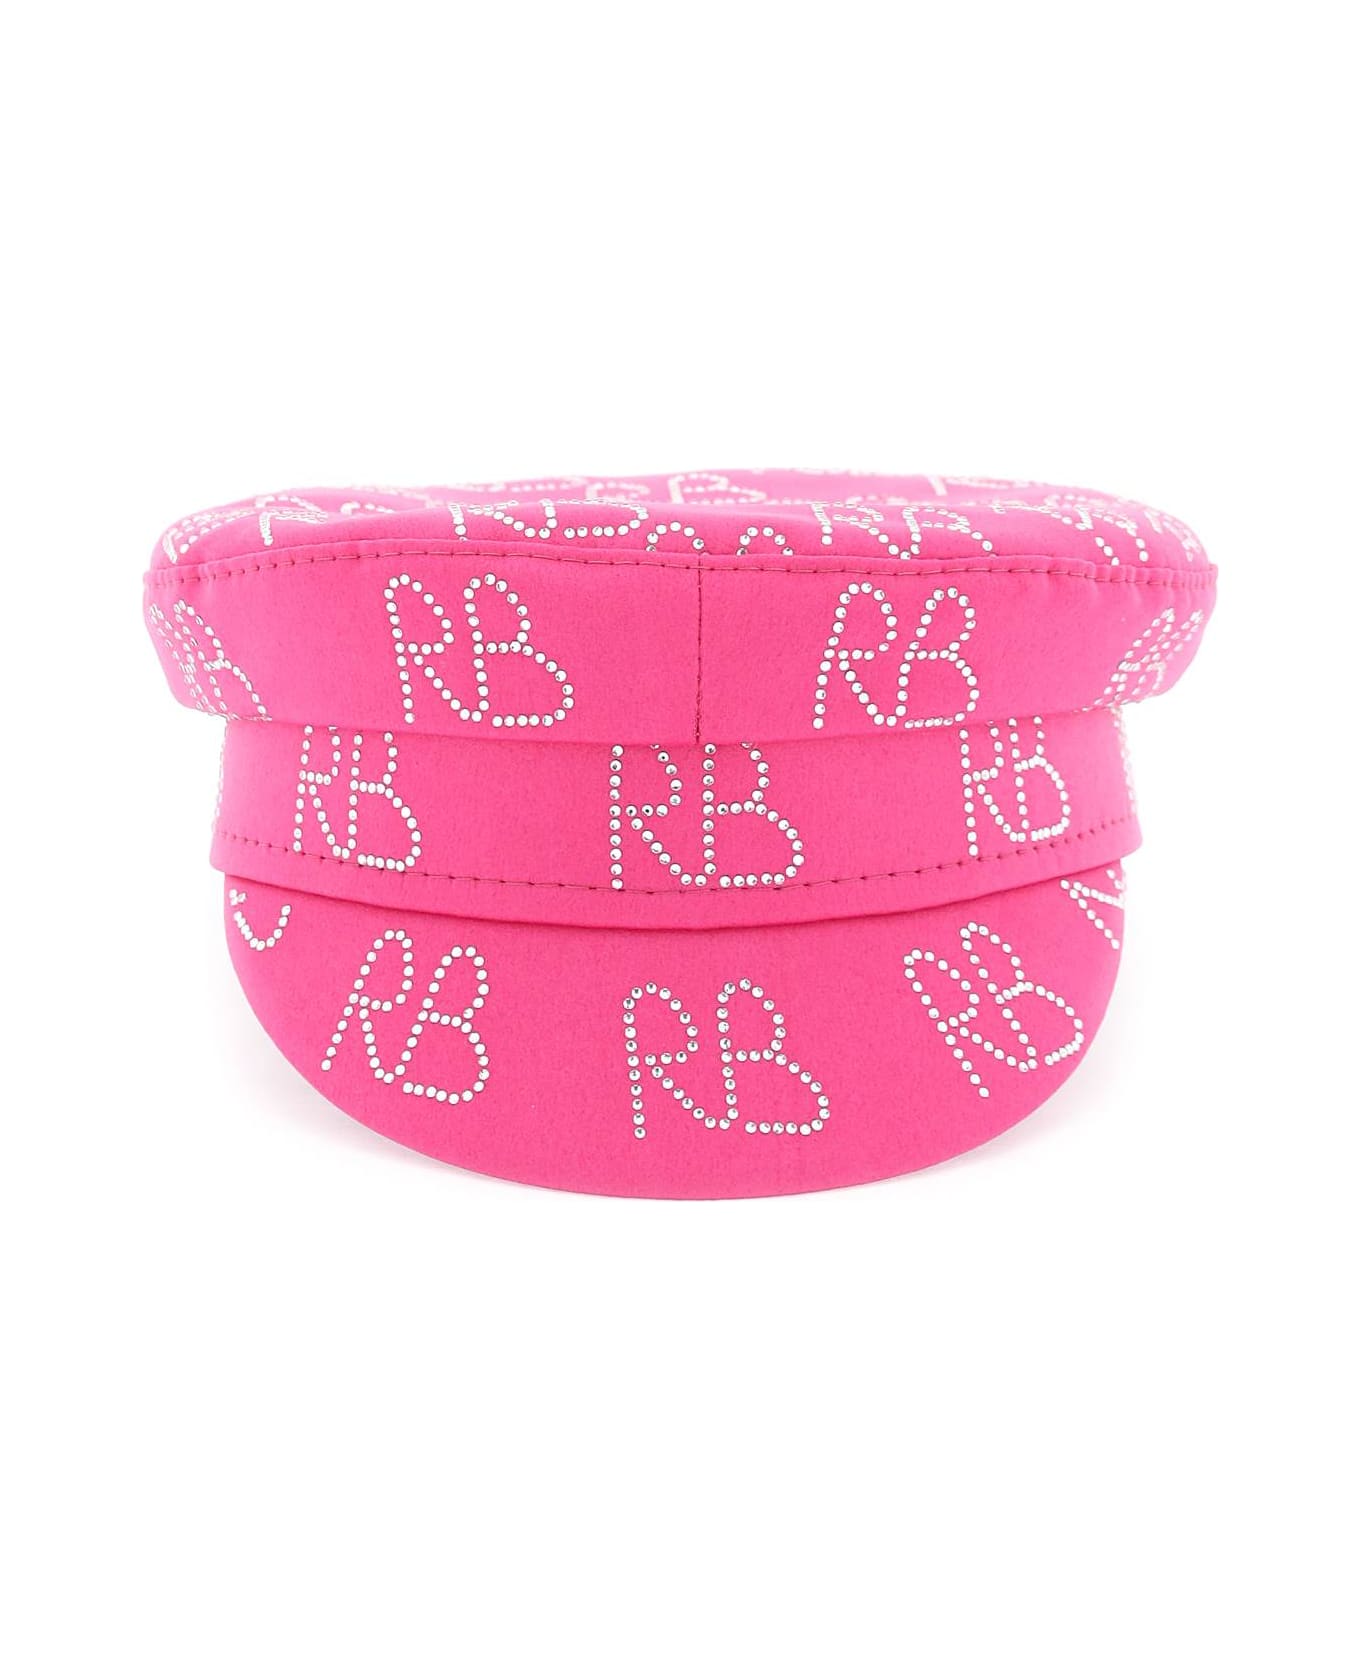 Ruslan Baginskiy Rhinestones Baker Boy Cap - PINK (Pink) ヘアアクセサリー